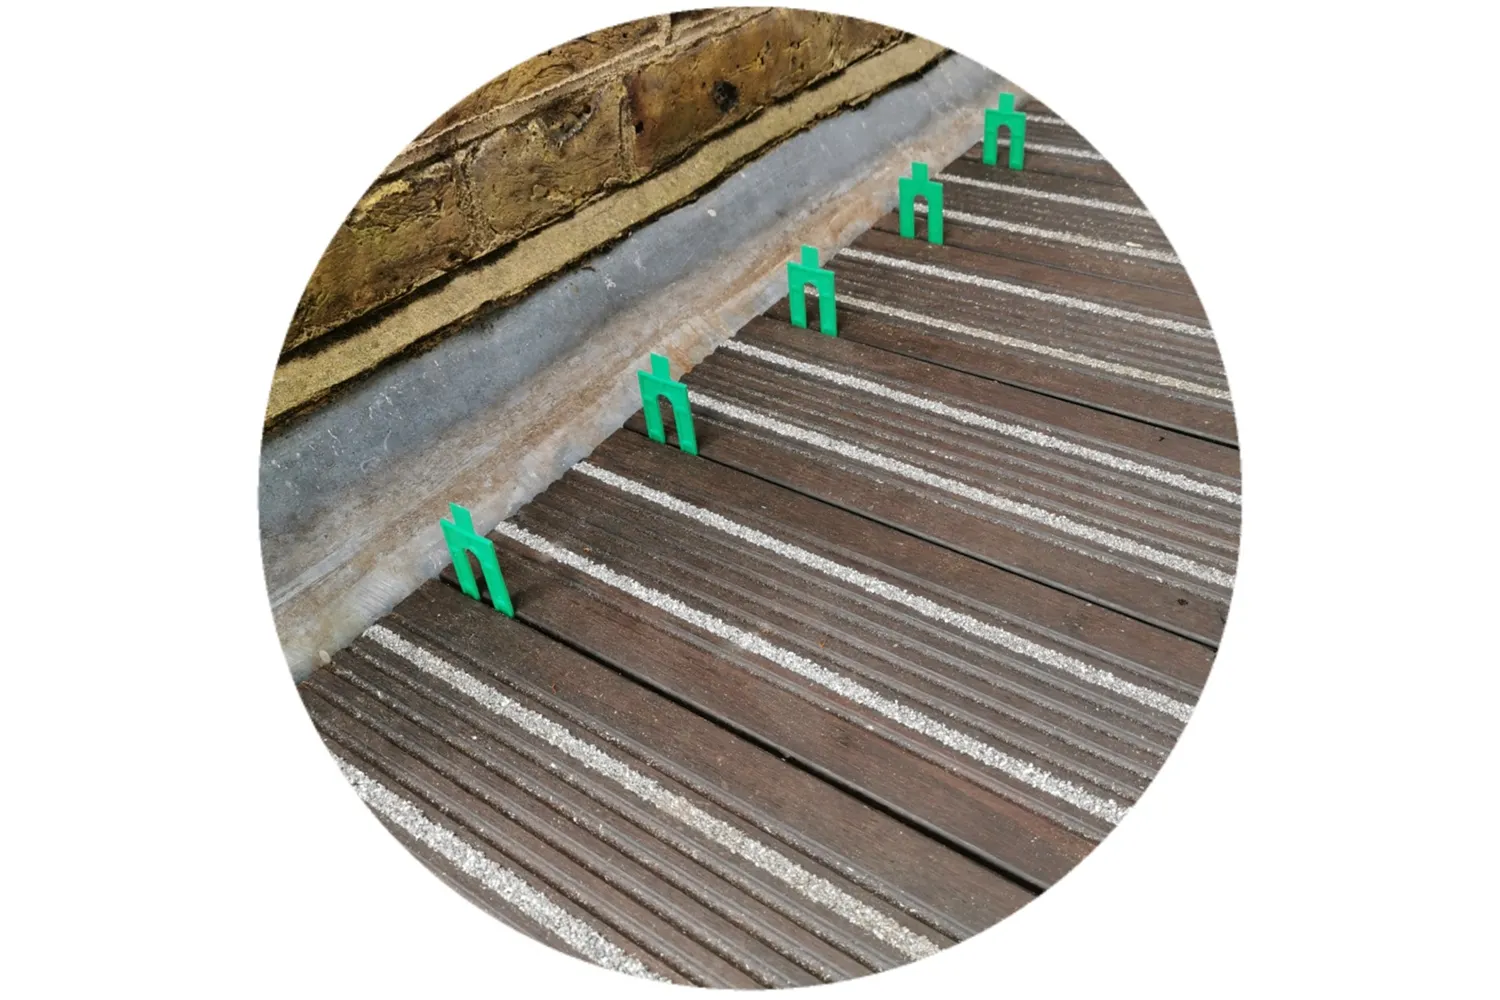 Edible rooftop garden in London with bamboo non-slip decking